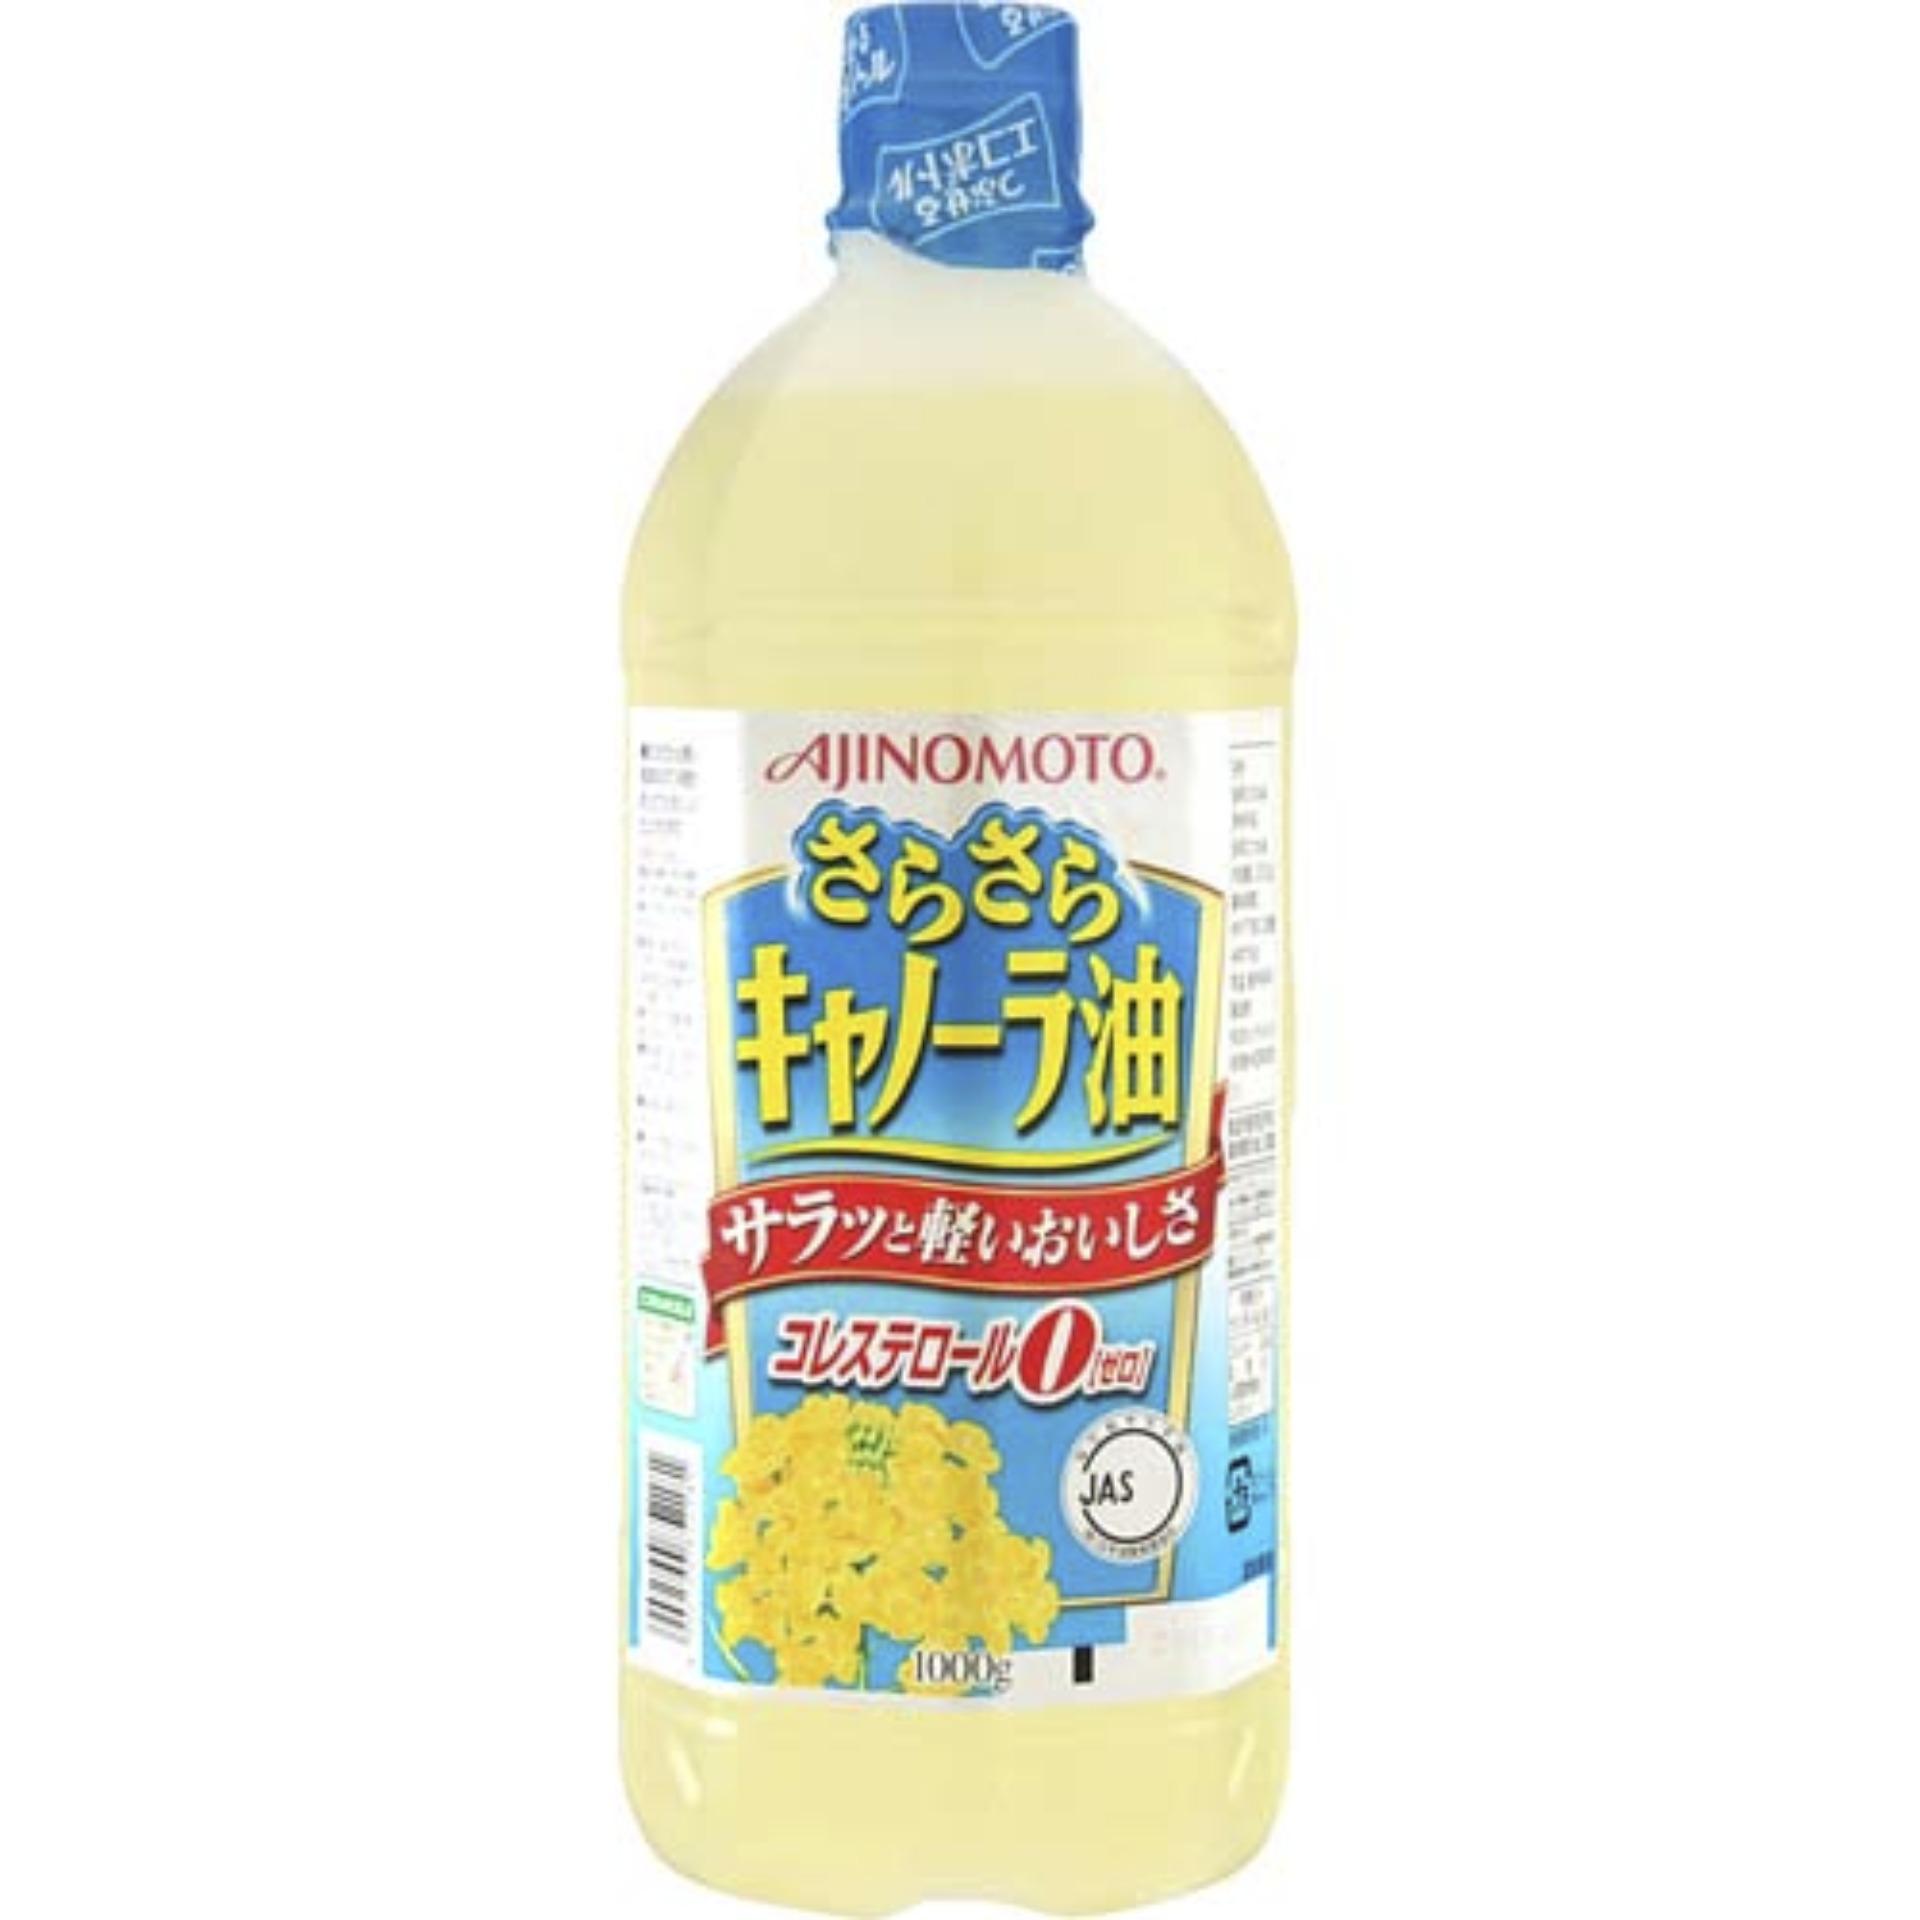 Chai dầu hoa cải Ajinomoto Nhật Bản